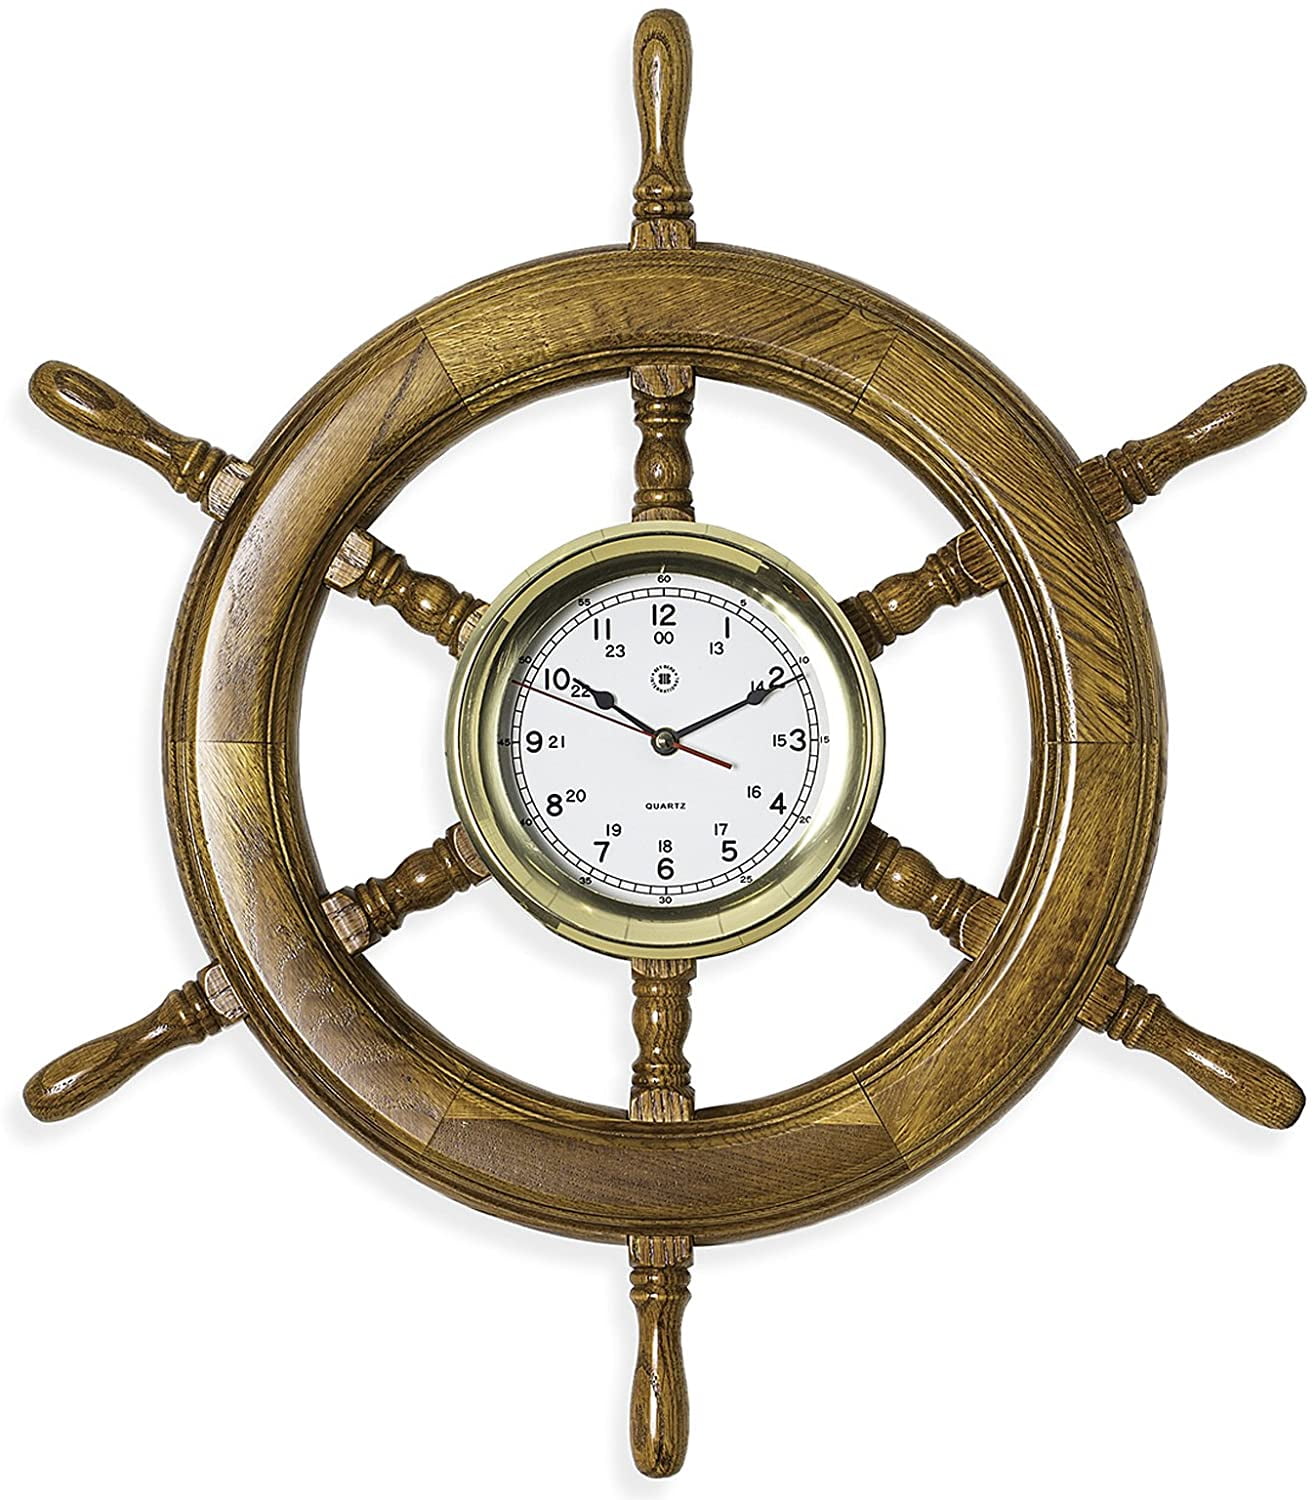 Kensington Row Coastal Collection Wall Clocks - Ships Wheel